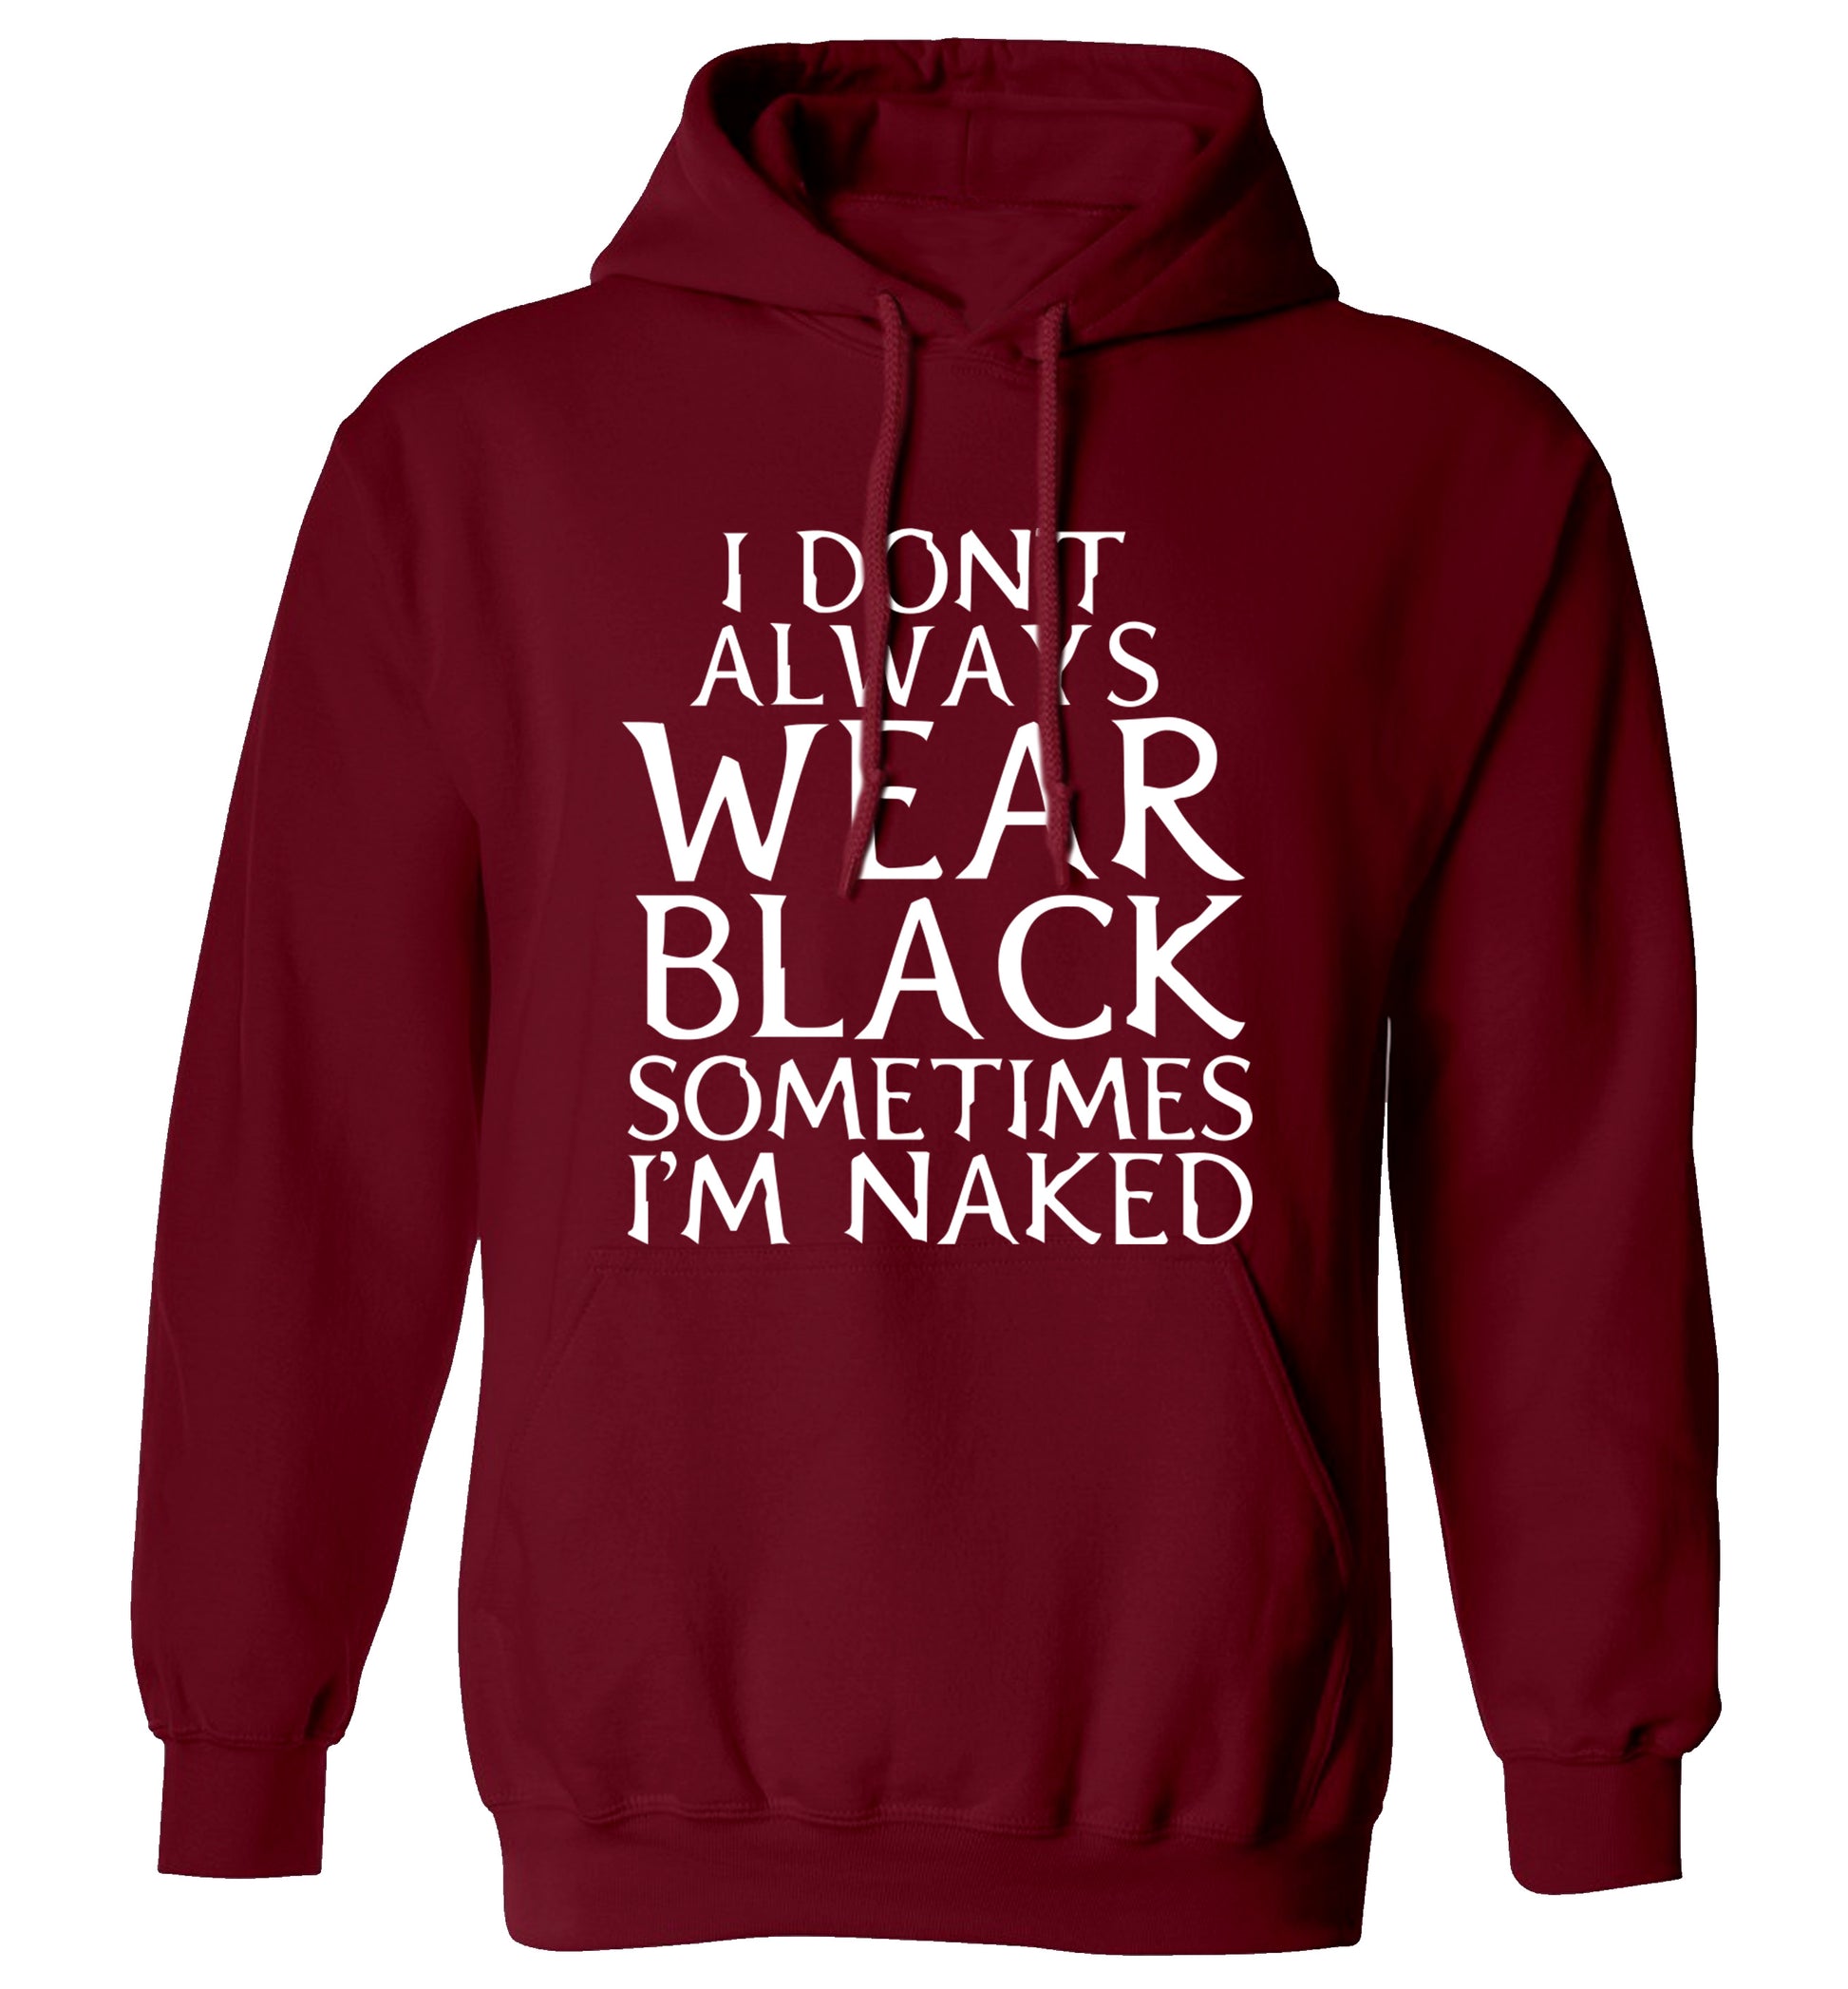 I don't always wear black sometimes I'm naked adults unisex maroon hoodie 2XL